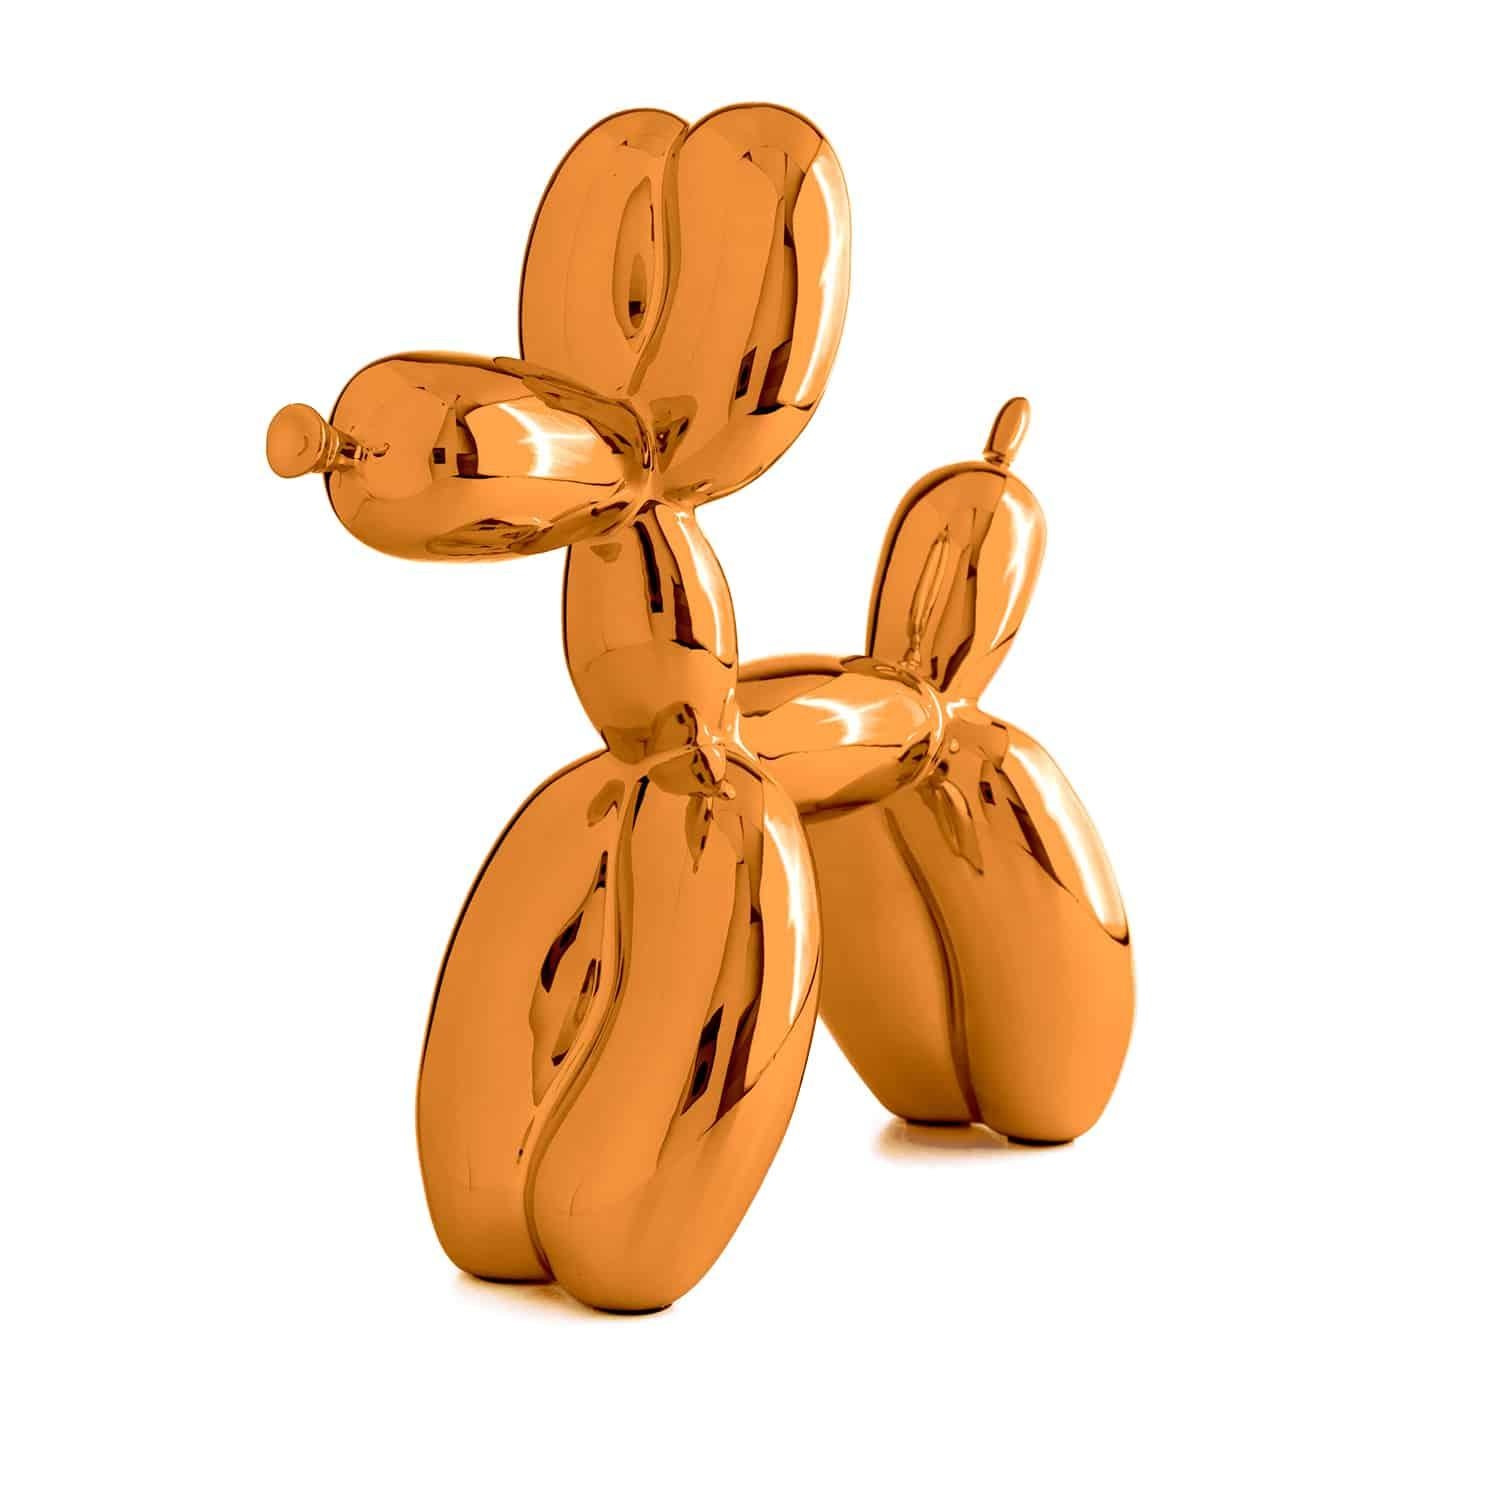 After Jeff Koons Figurative Sculpture - Balloon Dog ( After ) - Orange